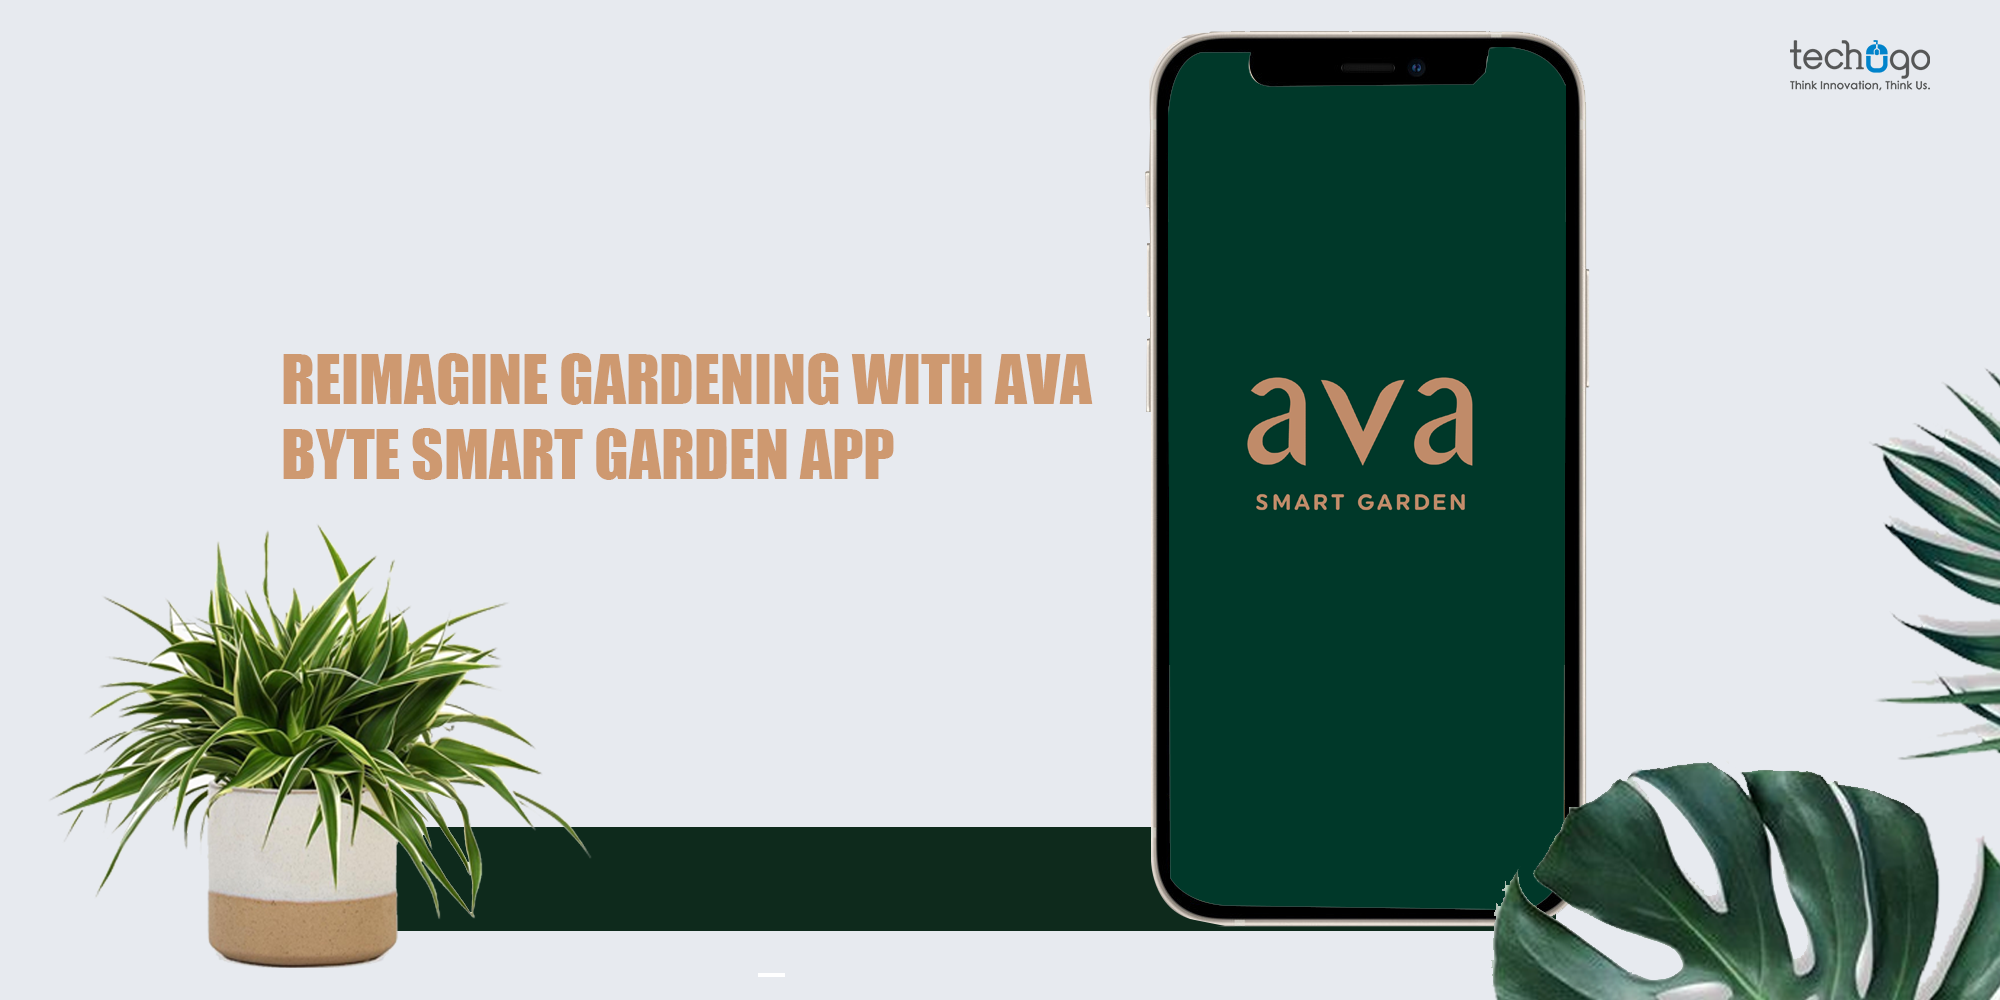 Reimagine Gardening With AVA Byte Smart Garden App